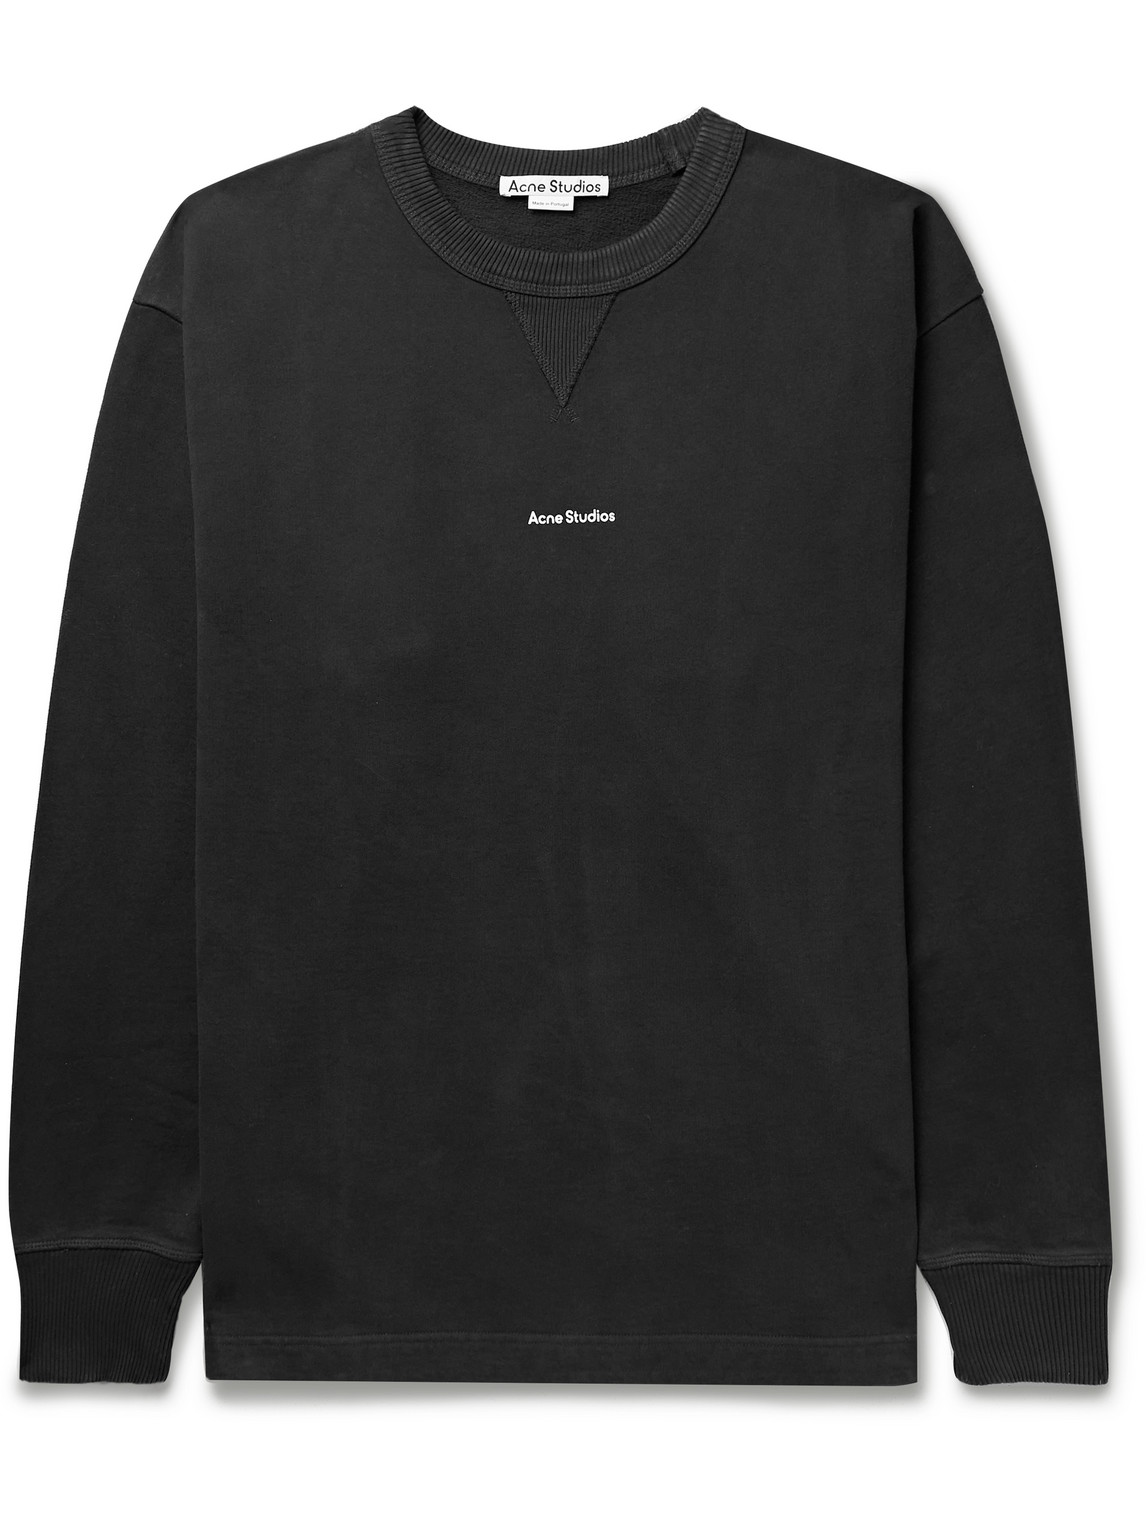 Acne Studios Logo-Print Cotton-Jersey Sweatshirt